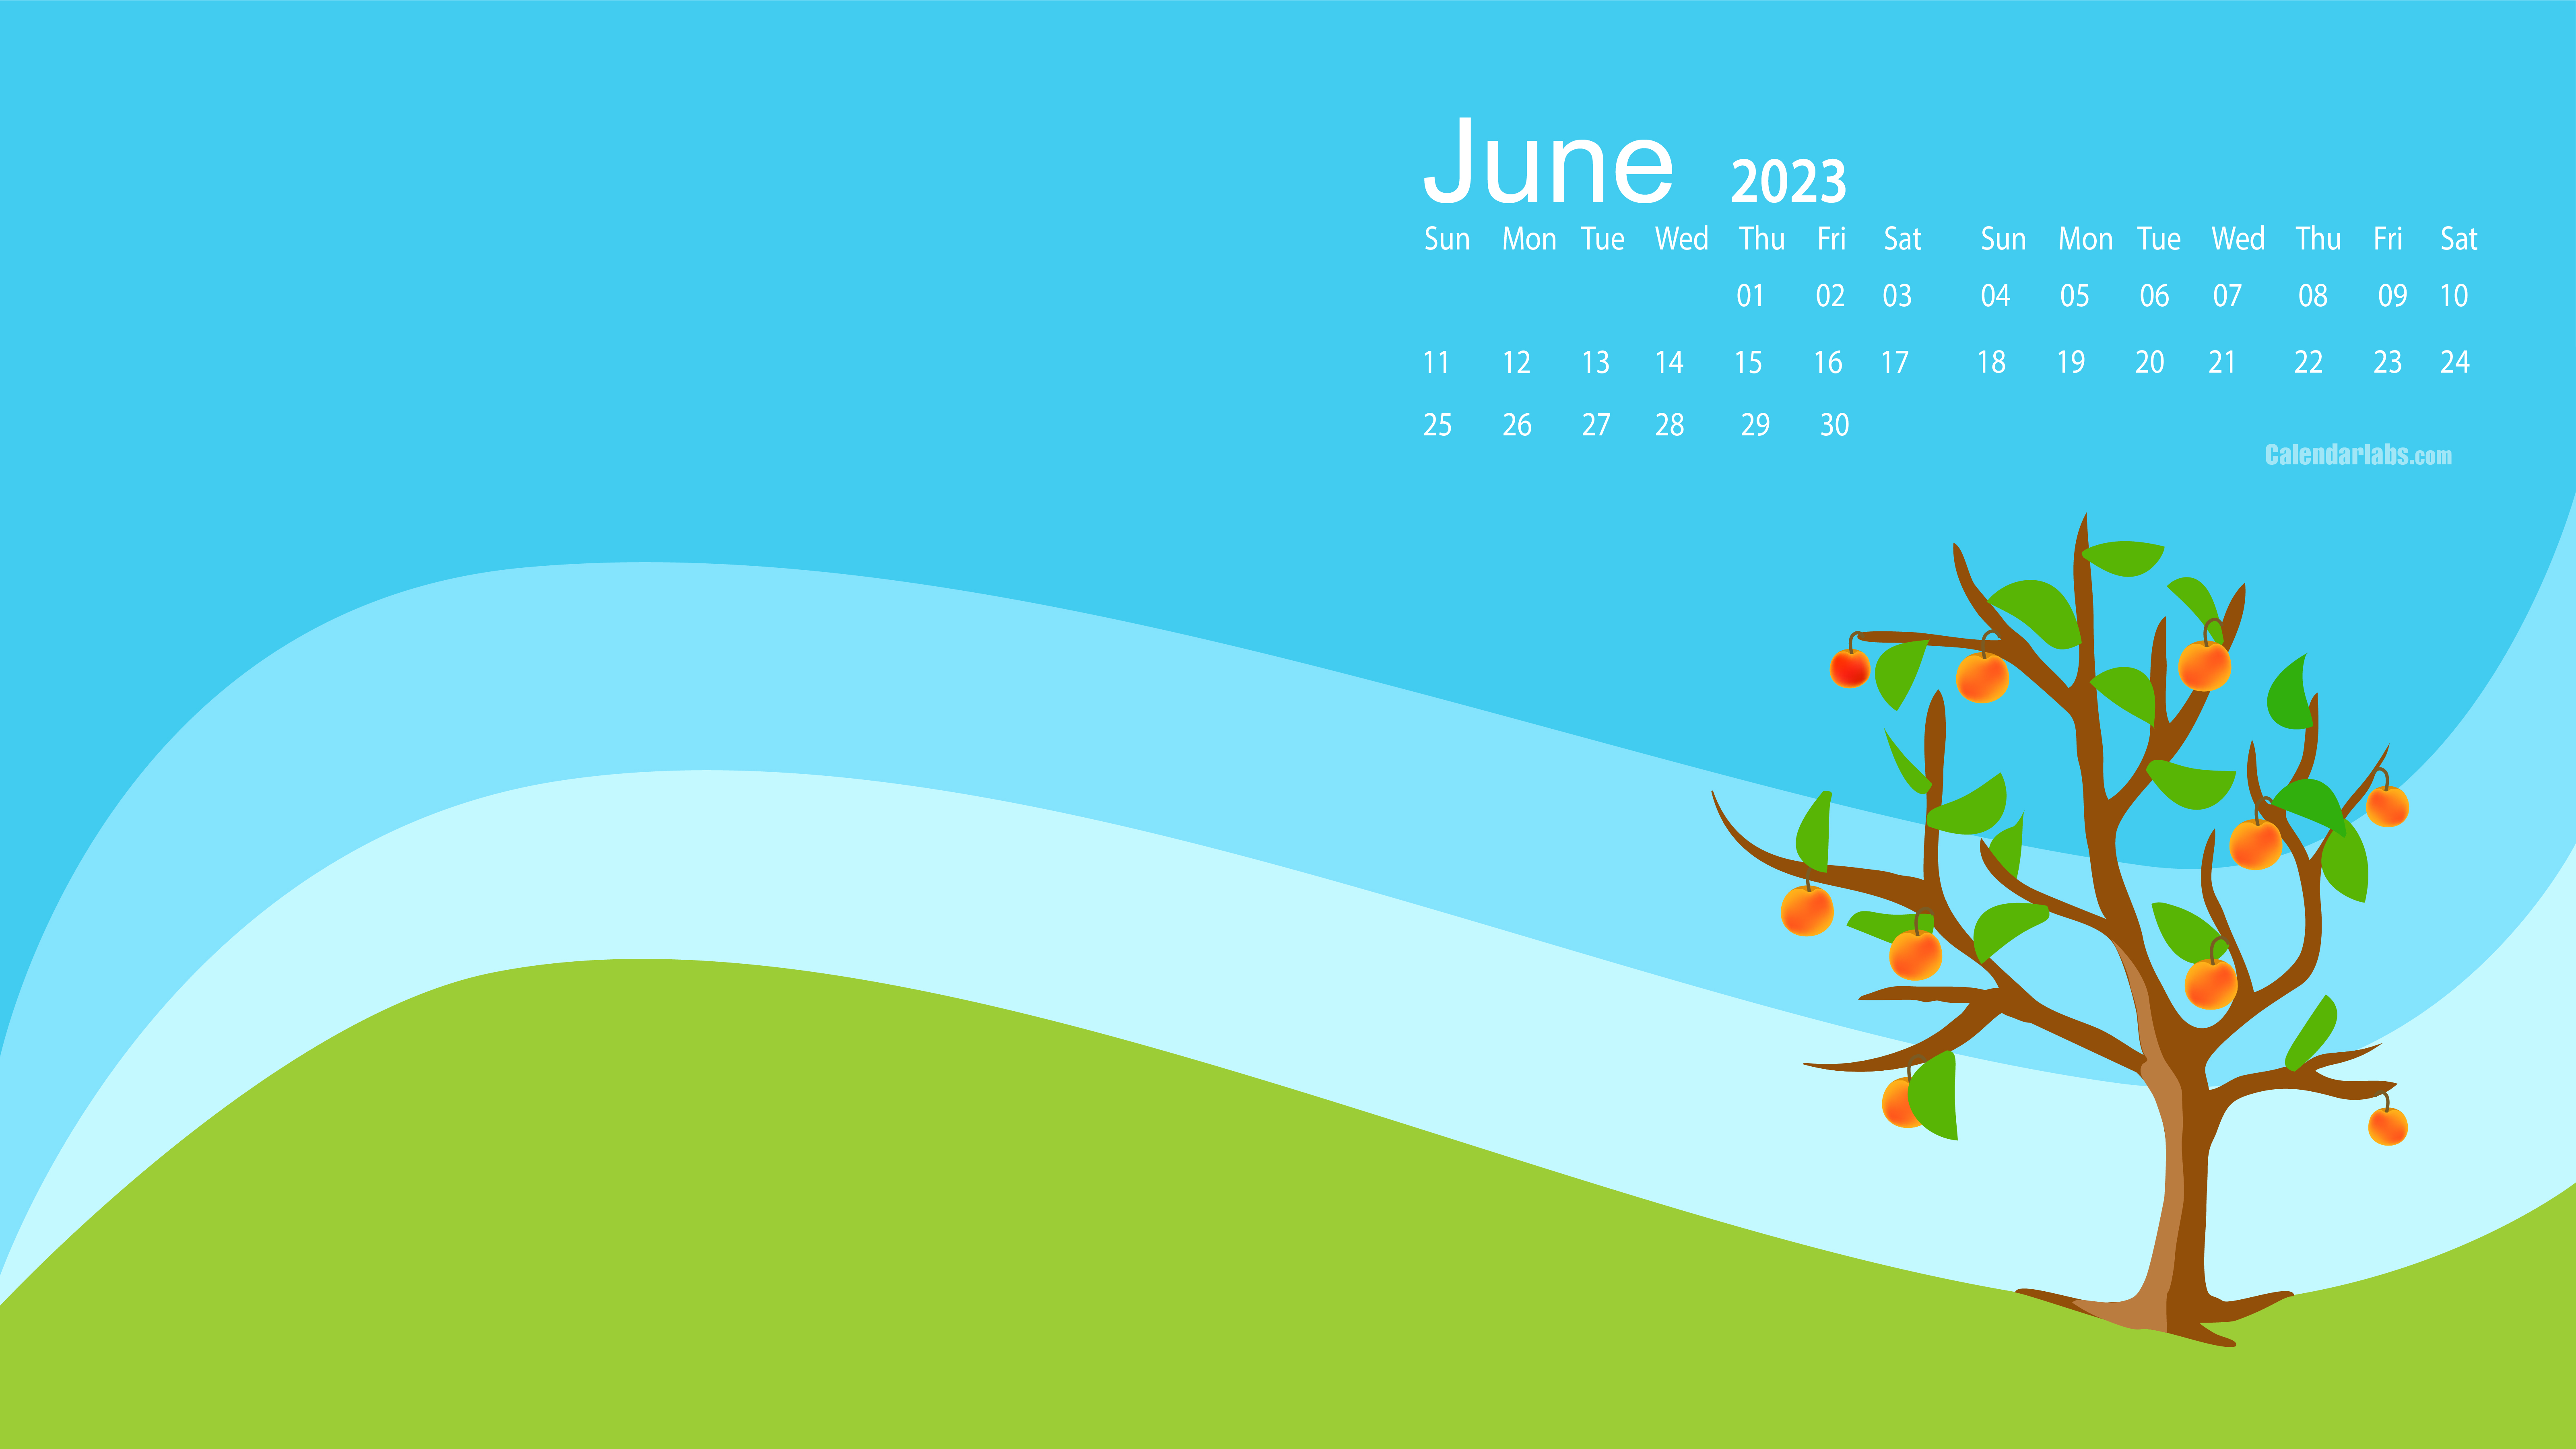 June 2023 Desktop Wallpaper Calendar CalendarLabs